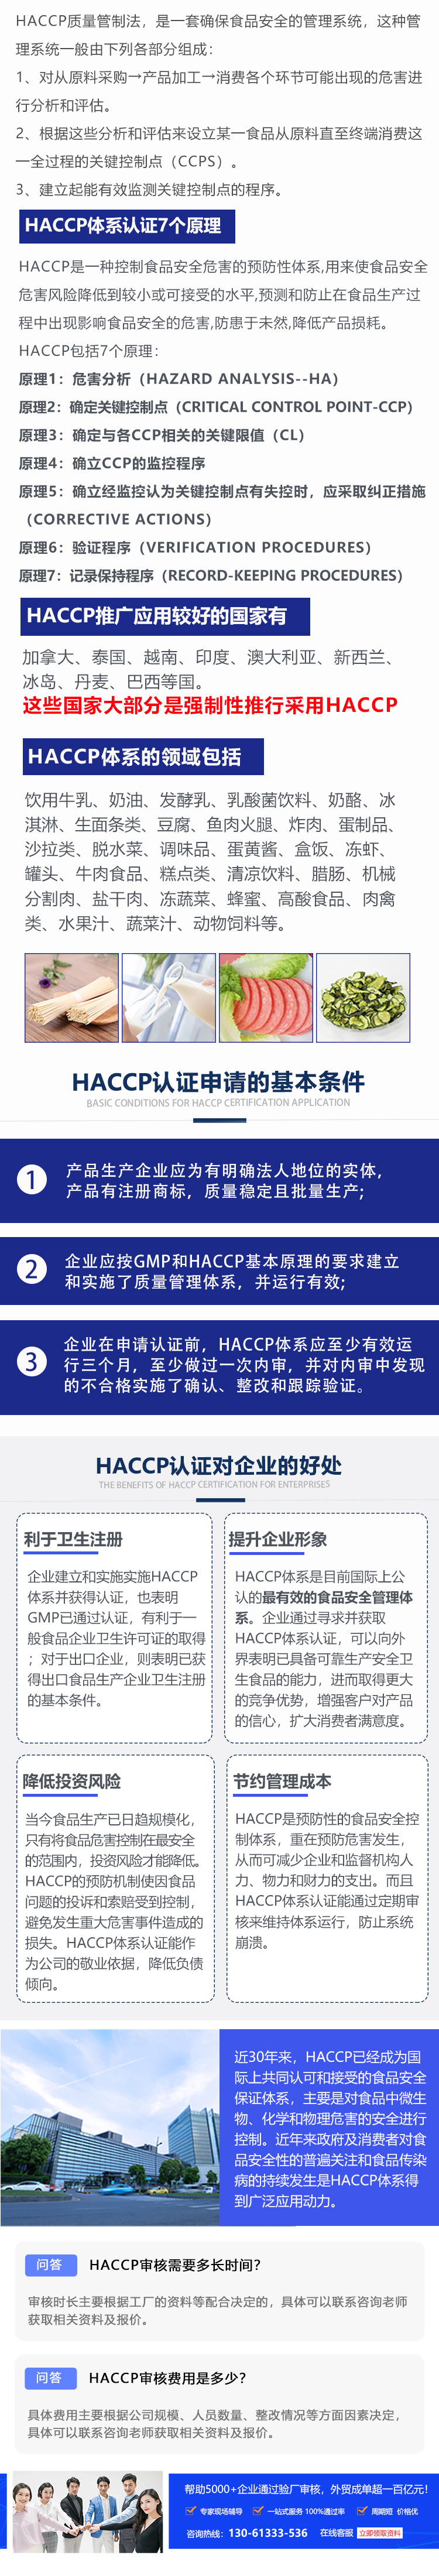 HACCP认证(图1)